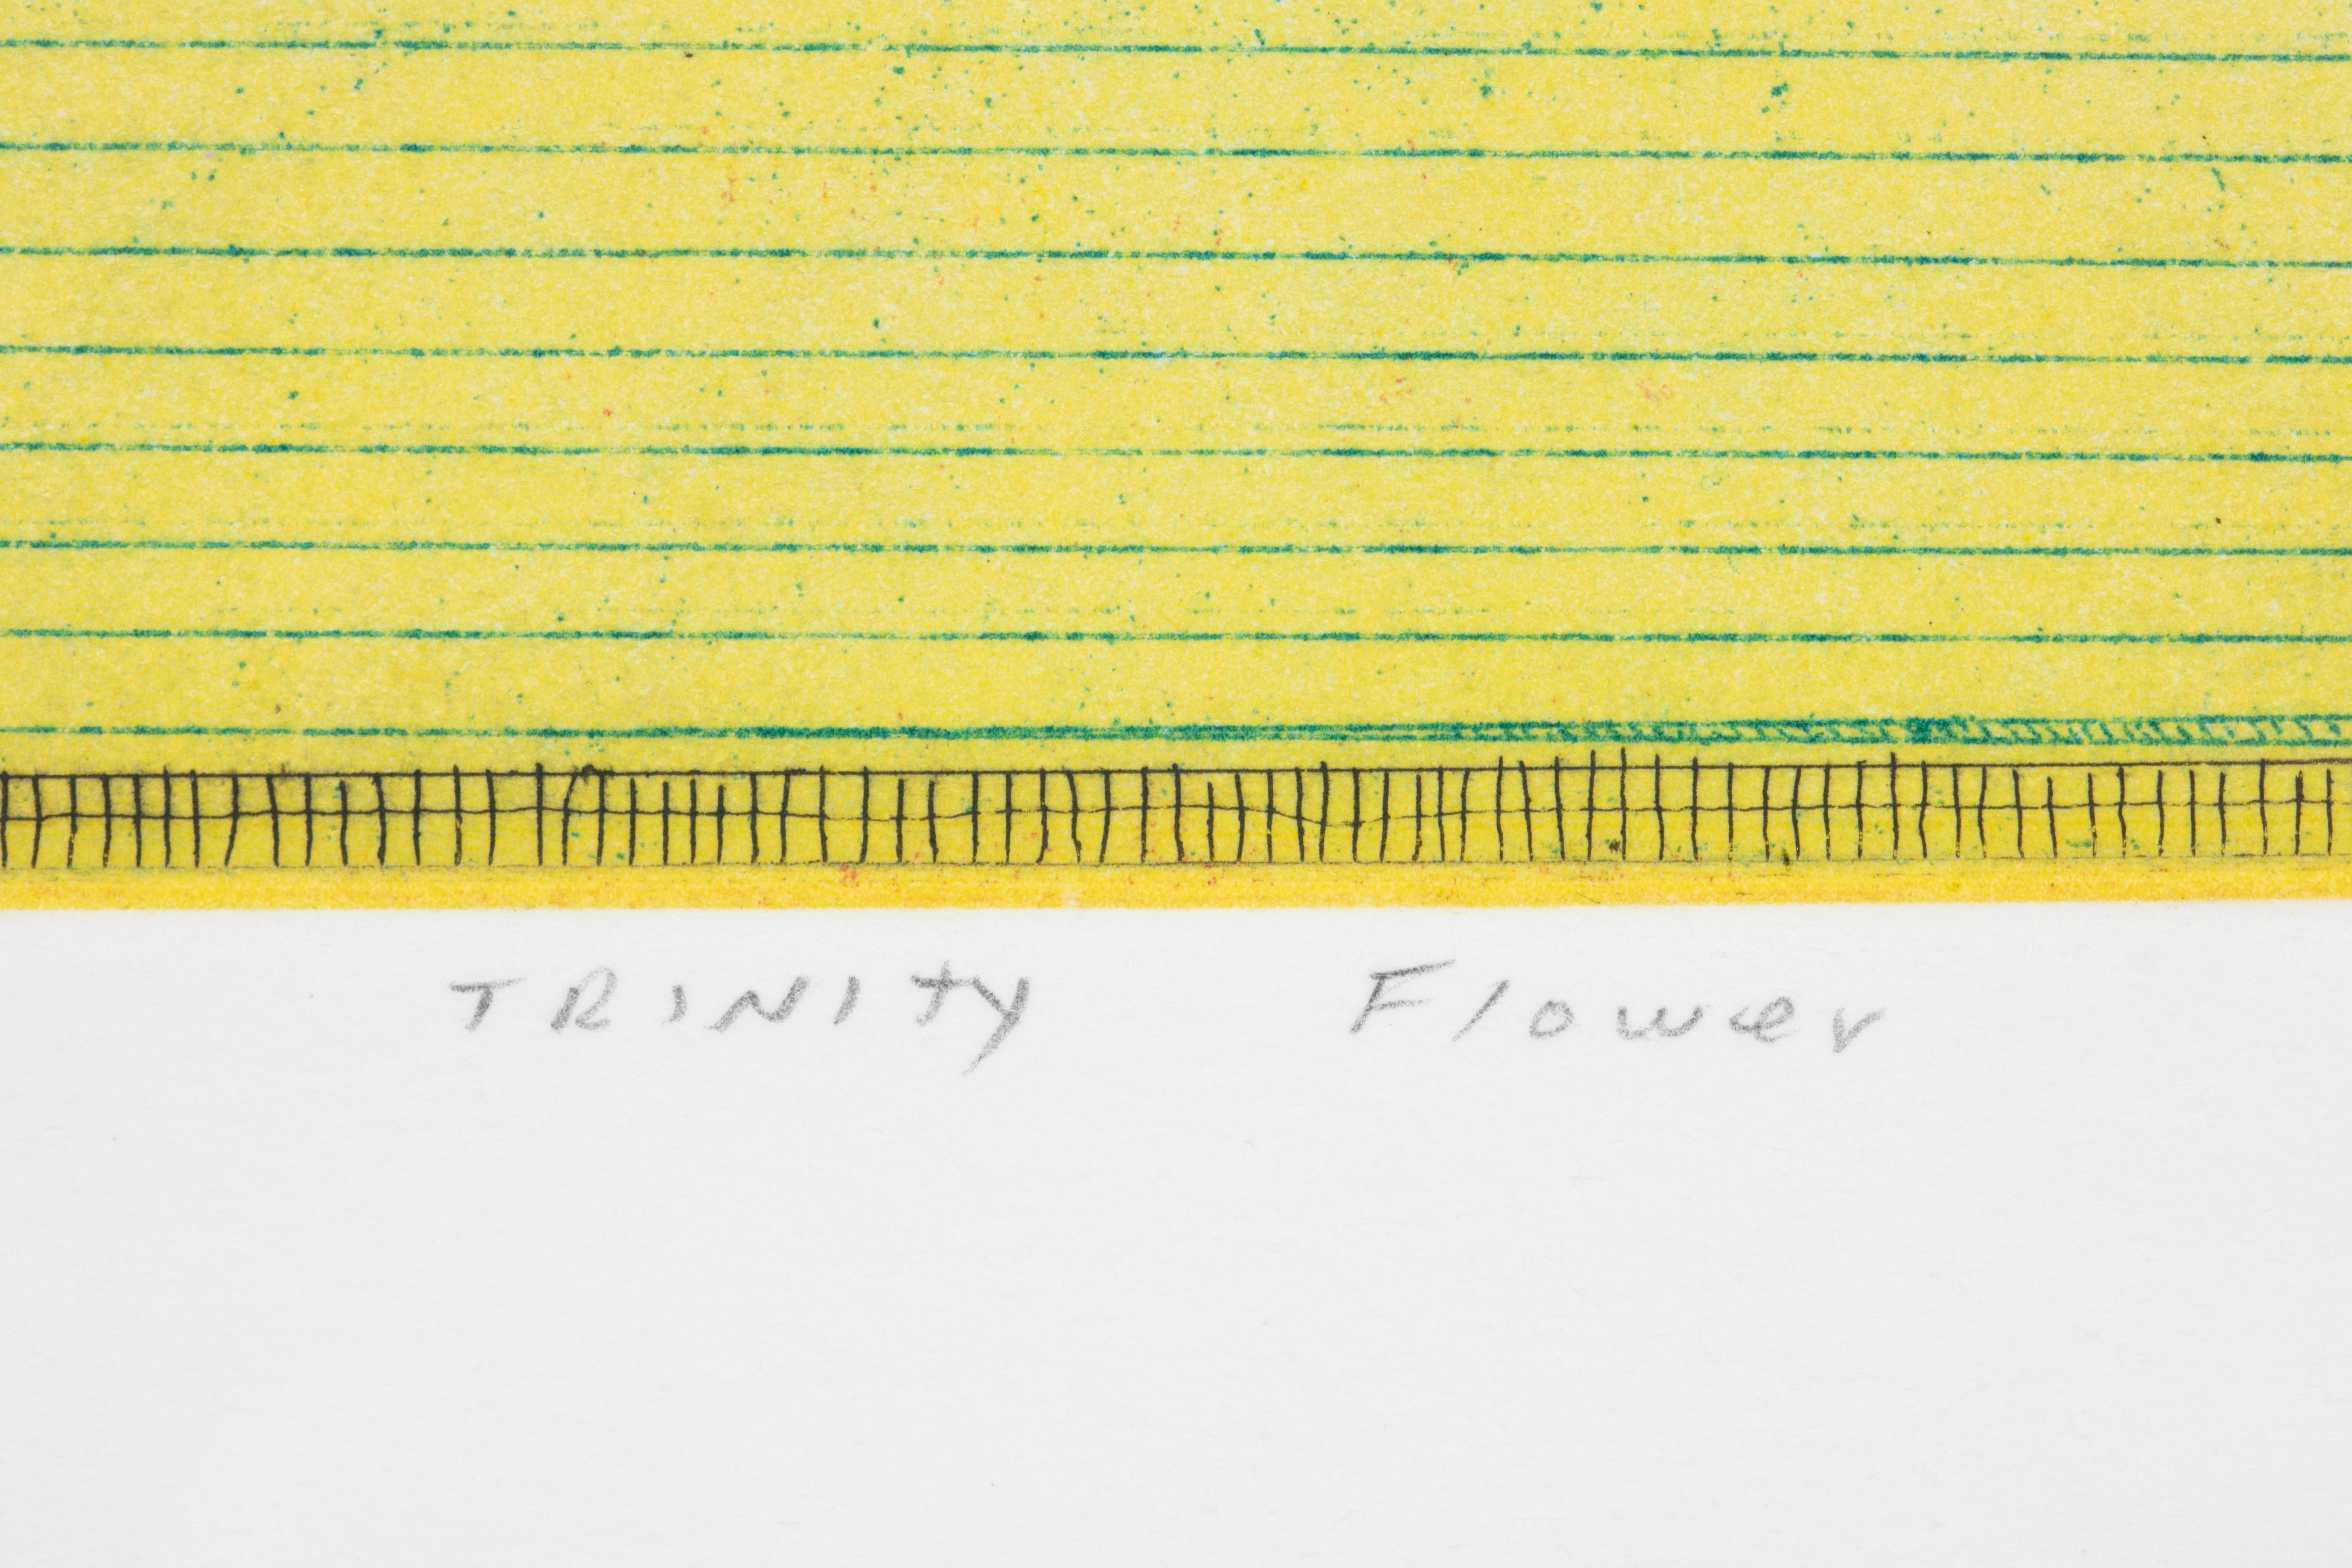 Trinity Flower - Contemporary Print by Tony Fitzpatrick 